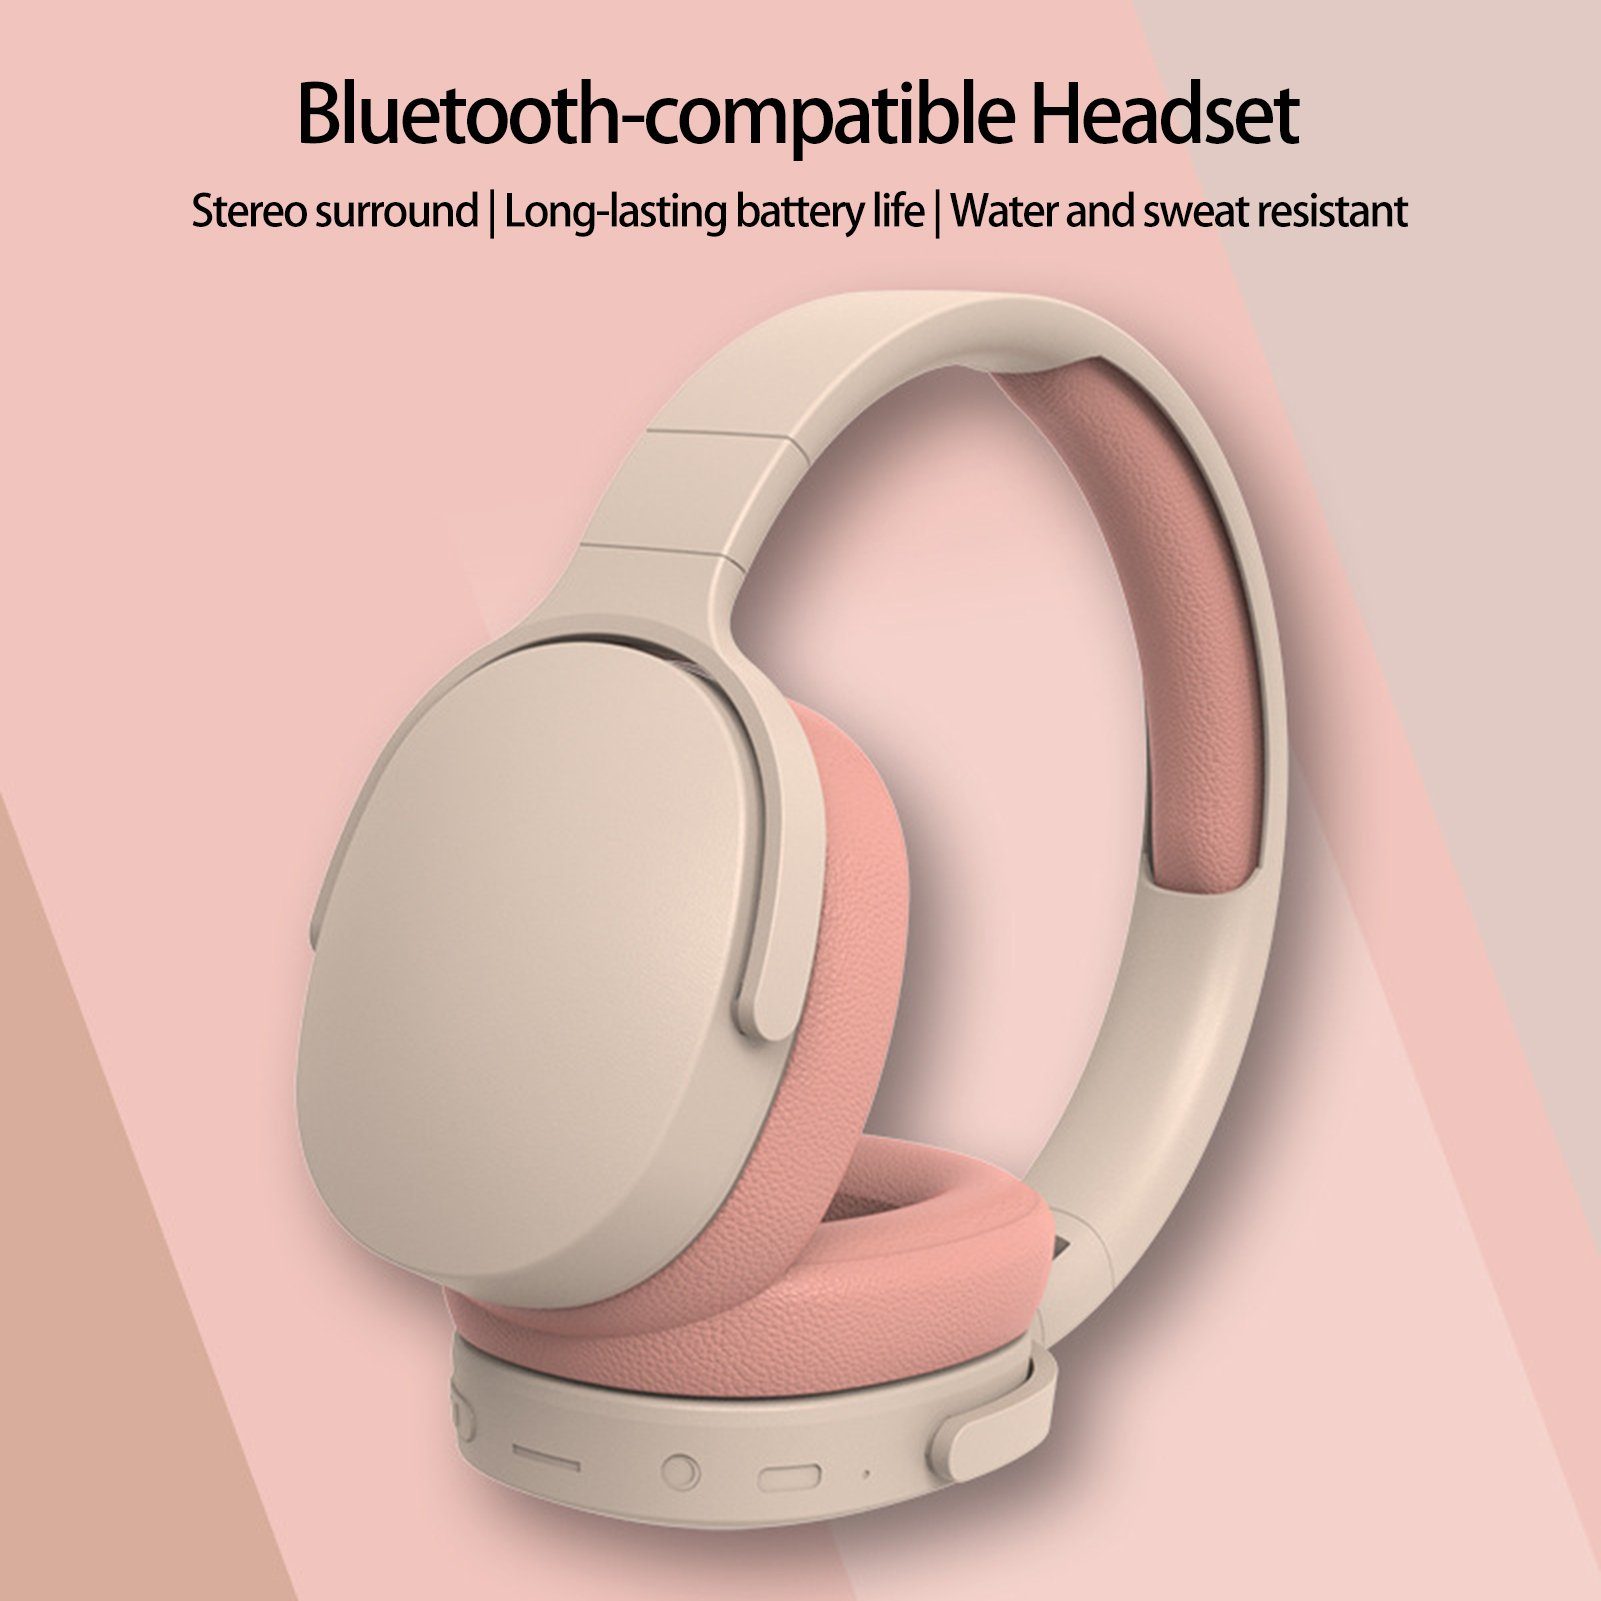 Blau Rutaqian Kopfhörer,HiFi Bluetooth Kopfhörer, Faltbare (Bluetooth) Bluetooth-Kopfhörer Kabellose Stereo Headset